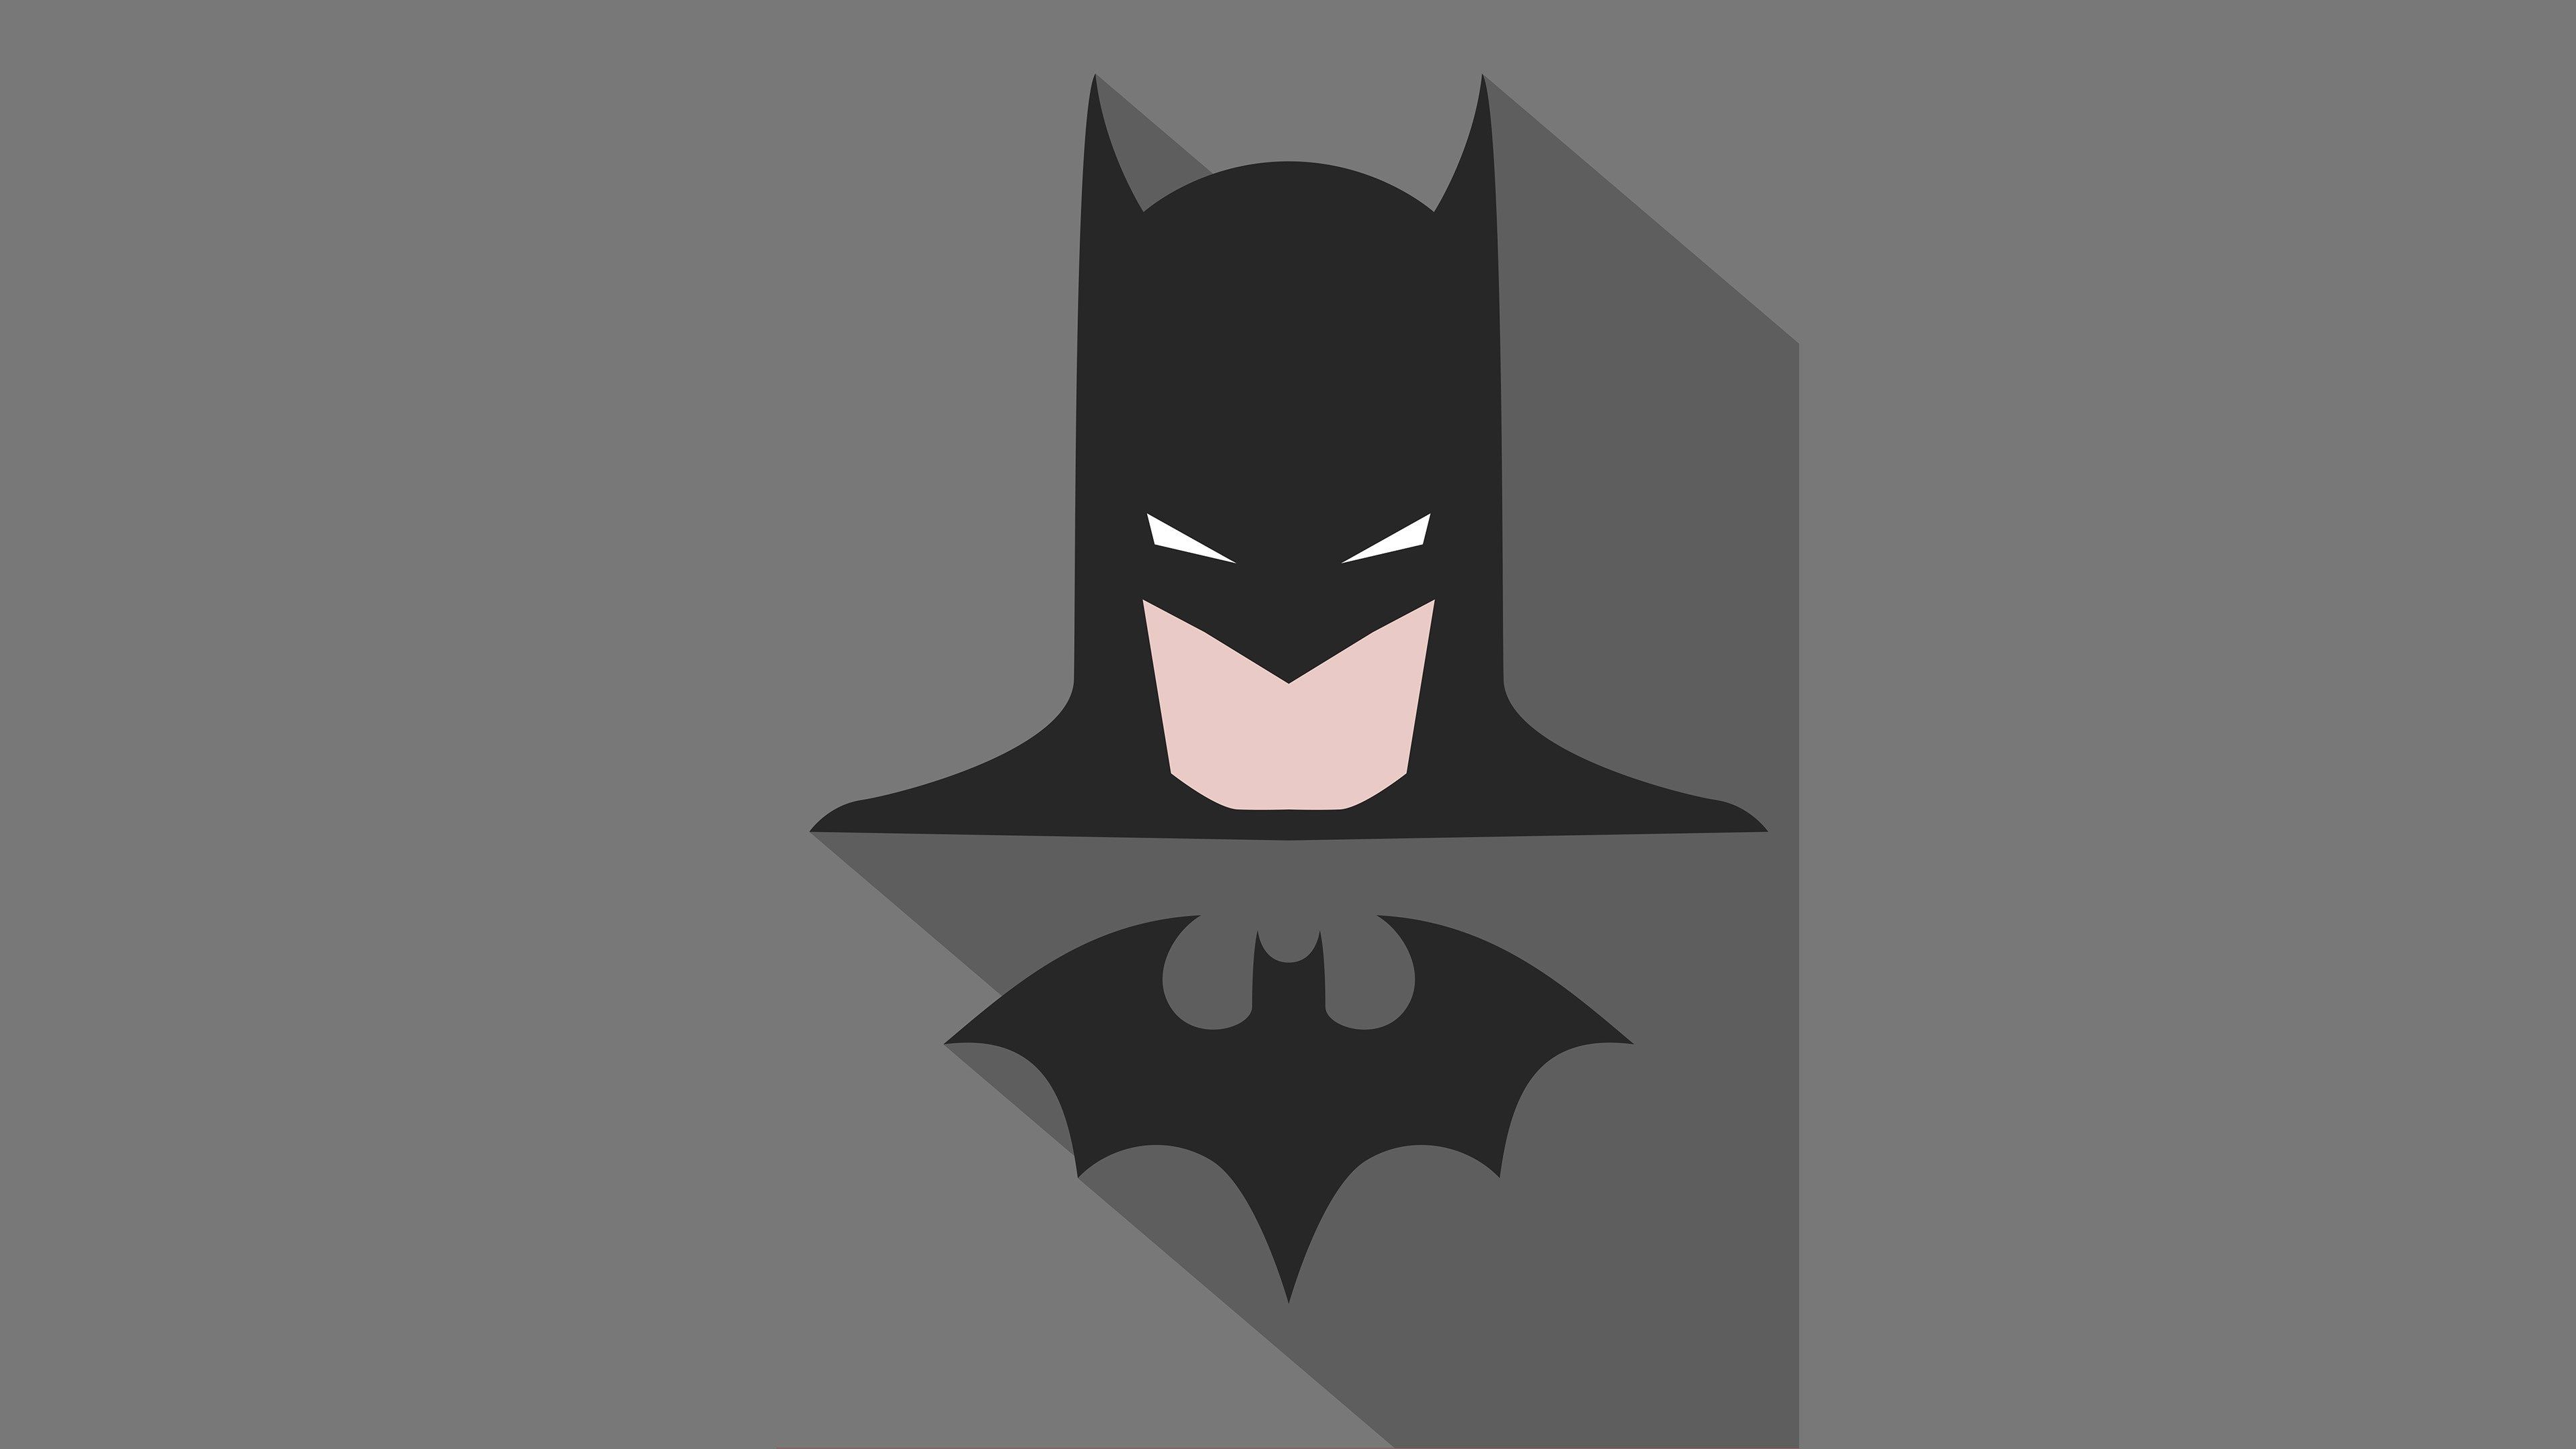 Filename: 3840x2160 batman 4k picture free for desktop Resolution: 3840x2160 File size: 181 kB Uploaded: Jackson H. Superhero wallpaper, Batman wallpaper, Batman